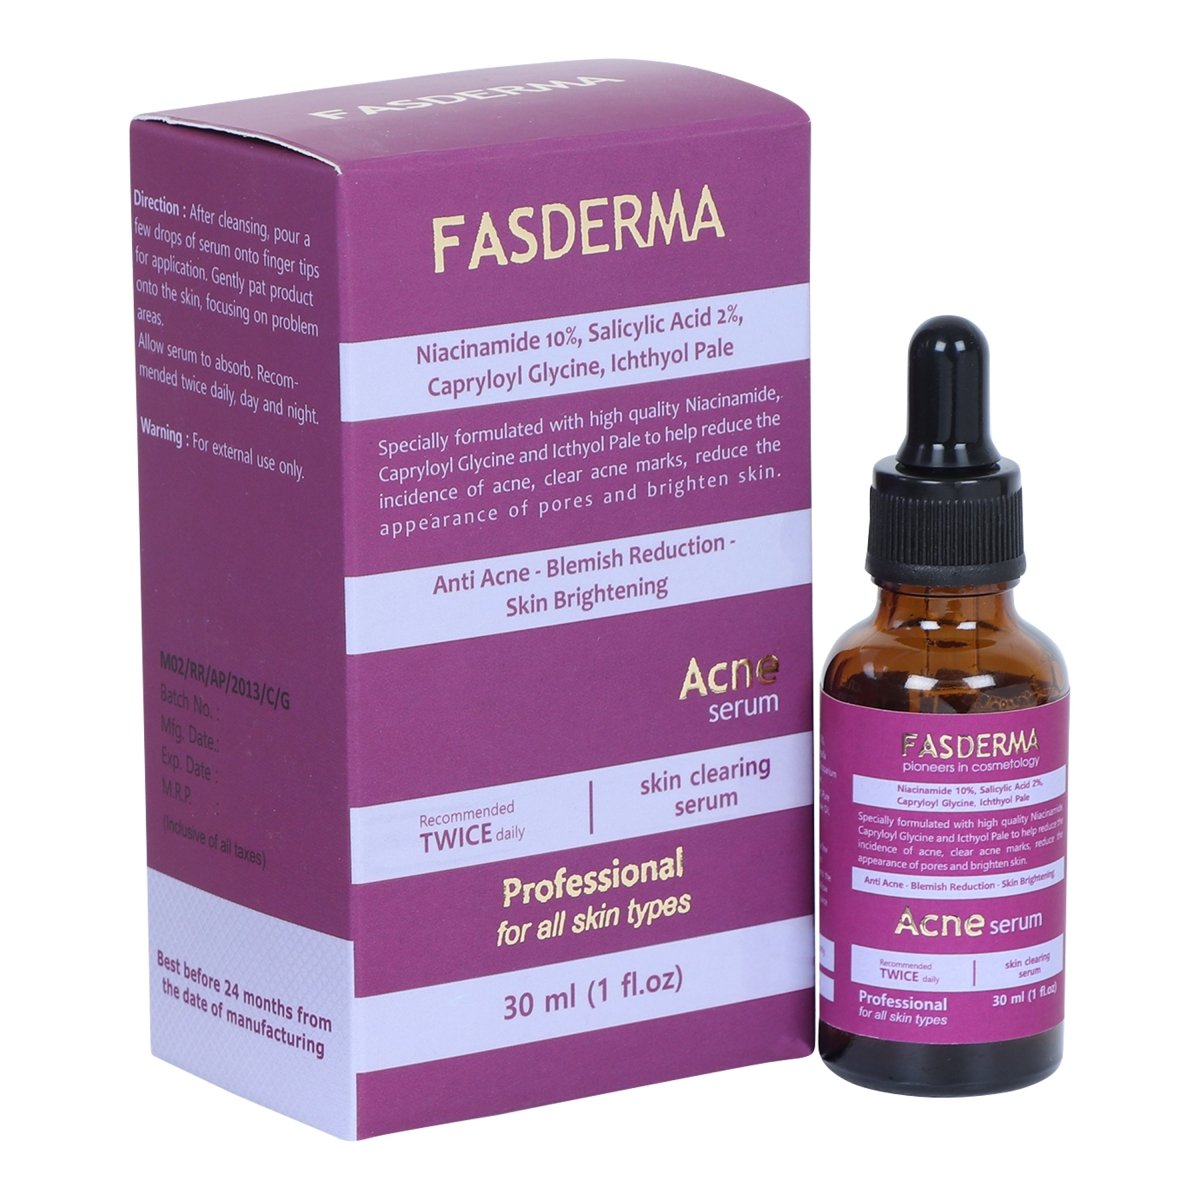 Fasderma - Acne Serum - 30ml - Fasderma India